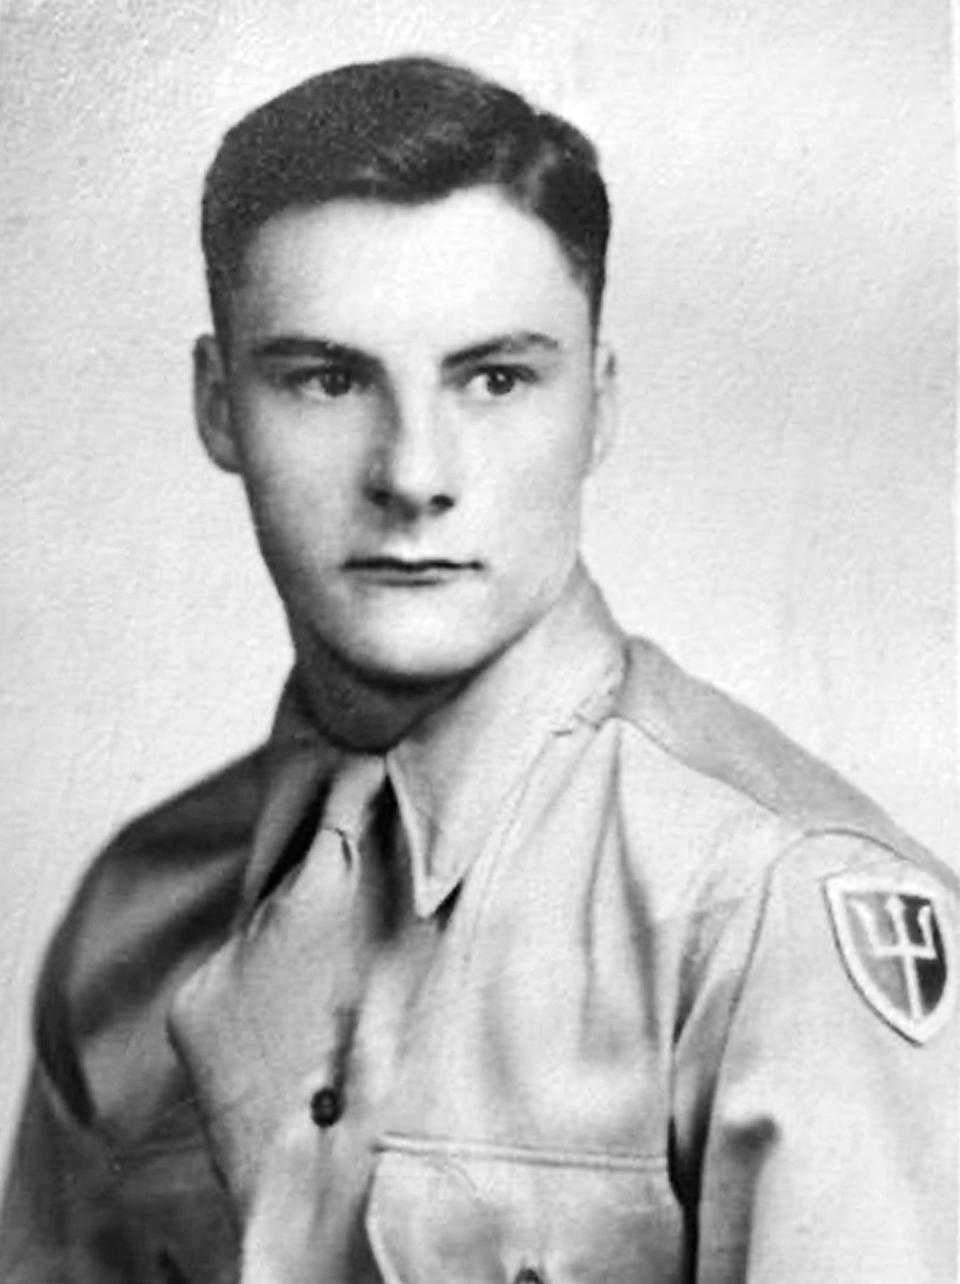 World War II veteran John H. Burke, of Worcester, fought in the Battle of the Rhineland right before graduating high school.